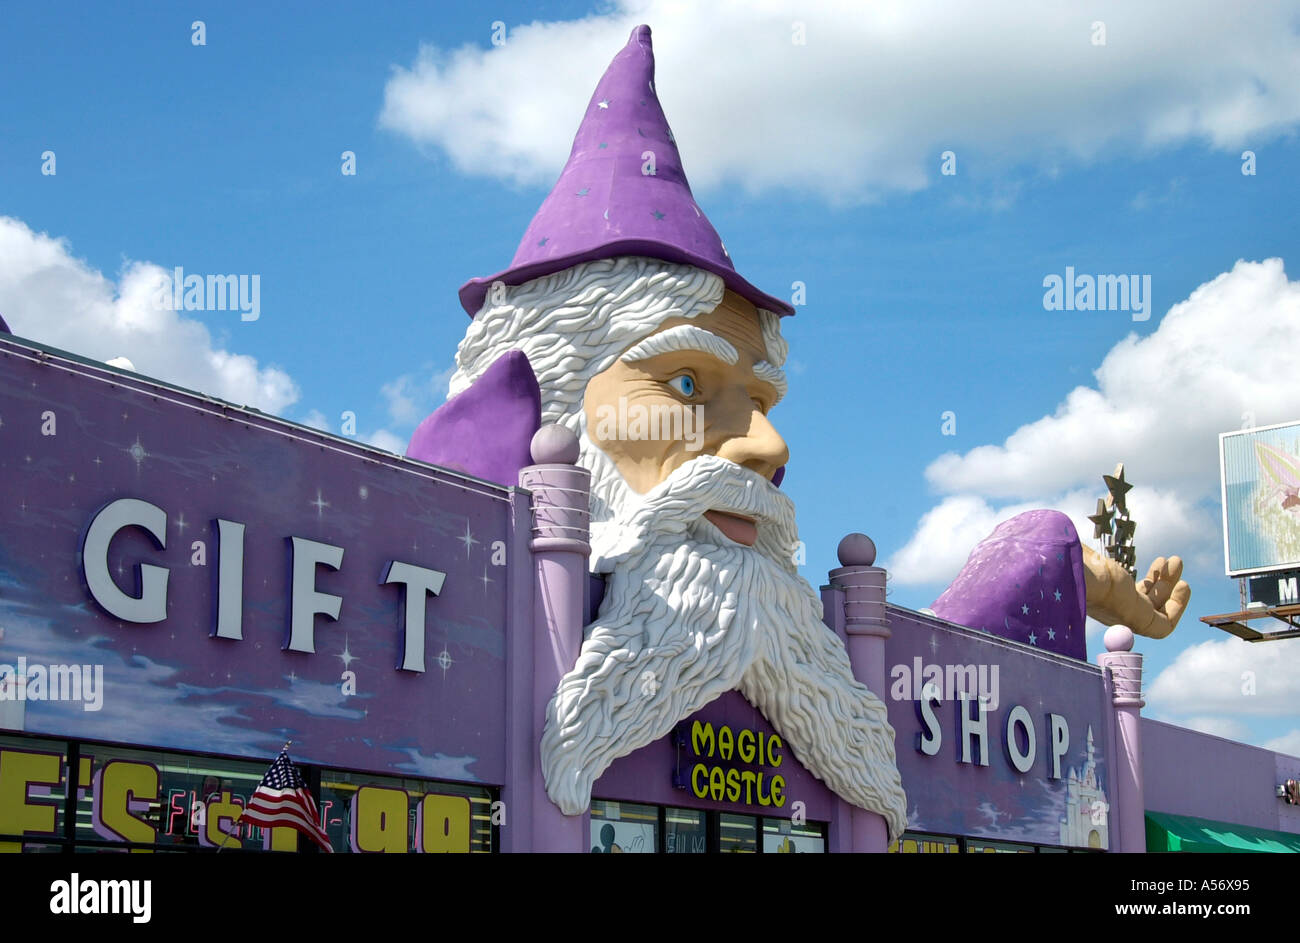 Magic Castle Gift Shop, Kissimmee, Orlando, Florida, USA